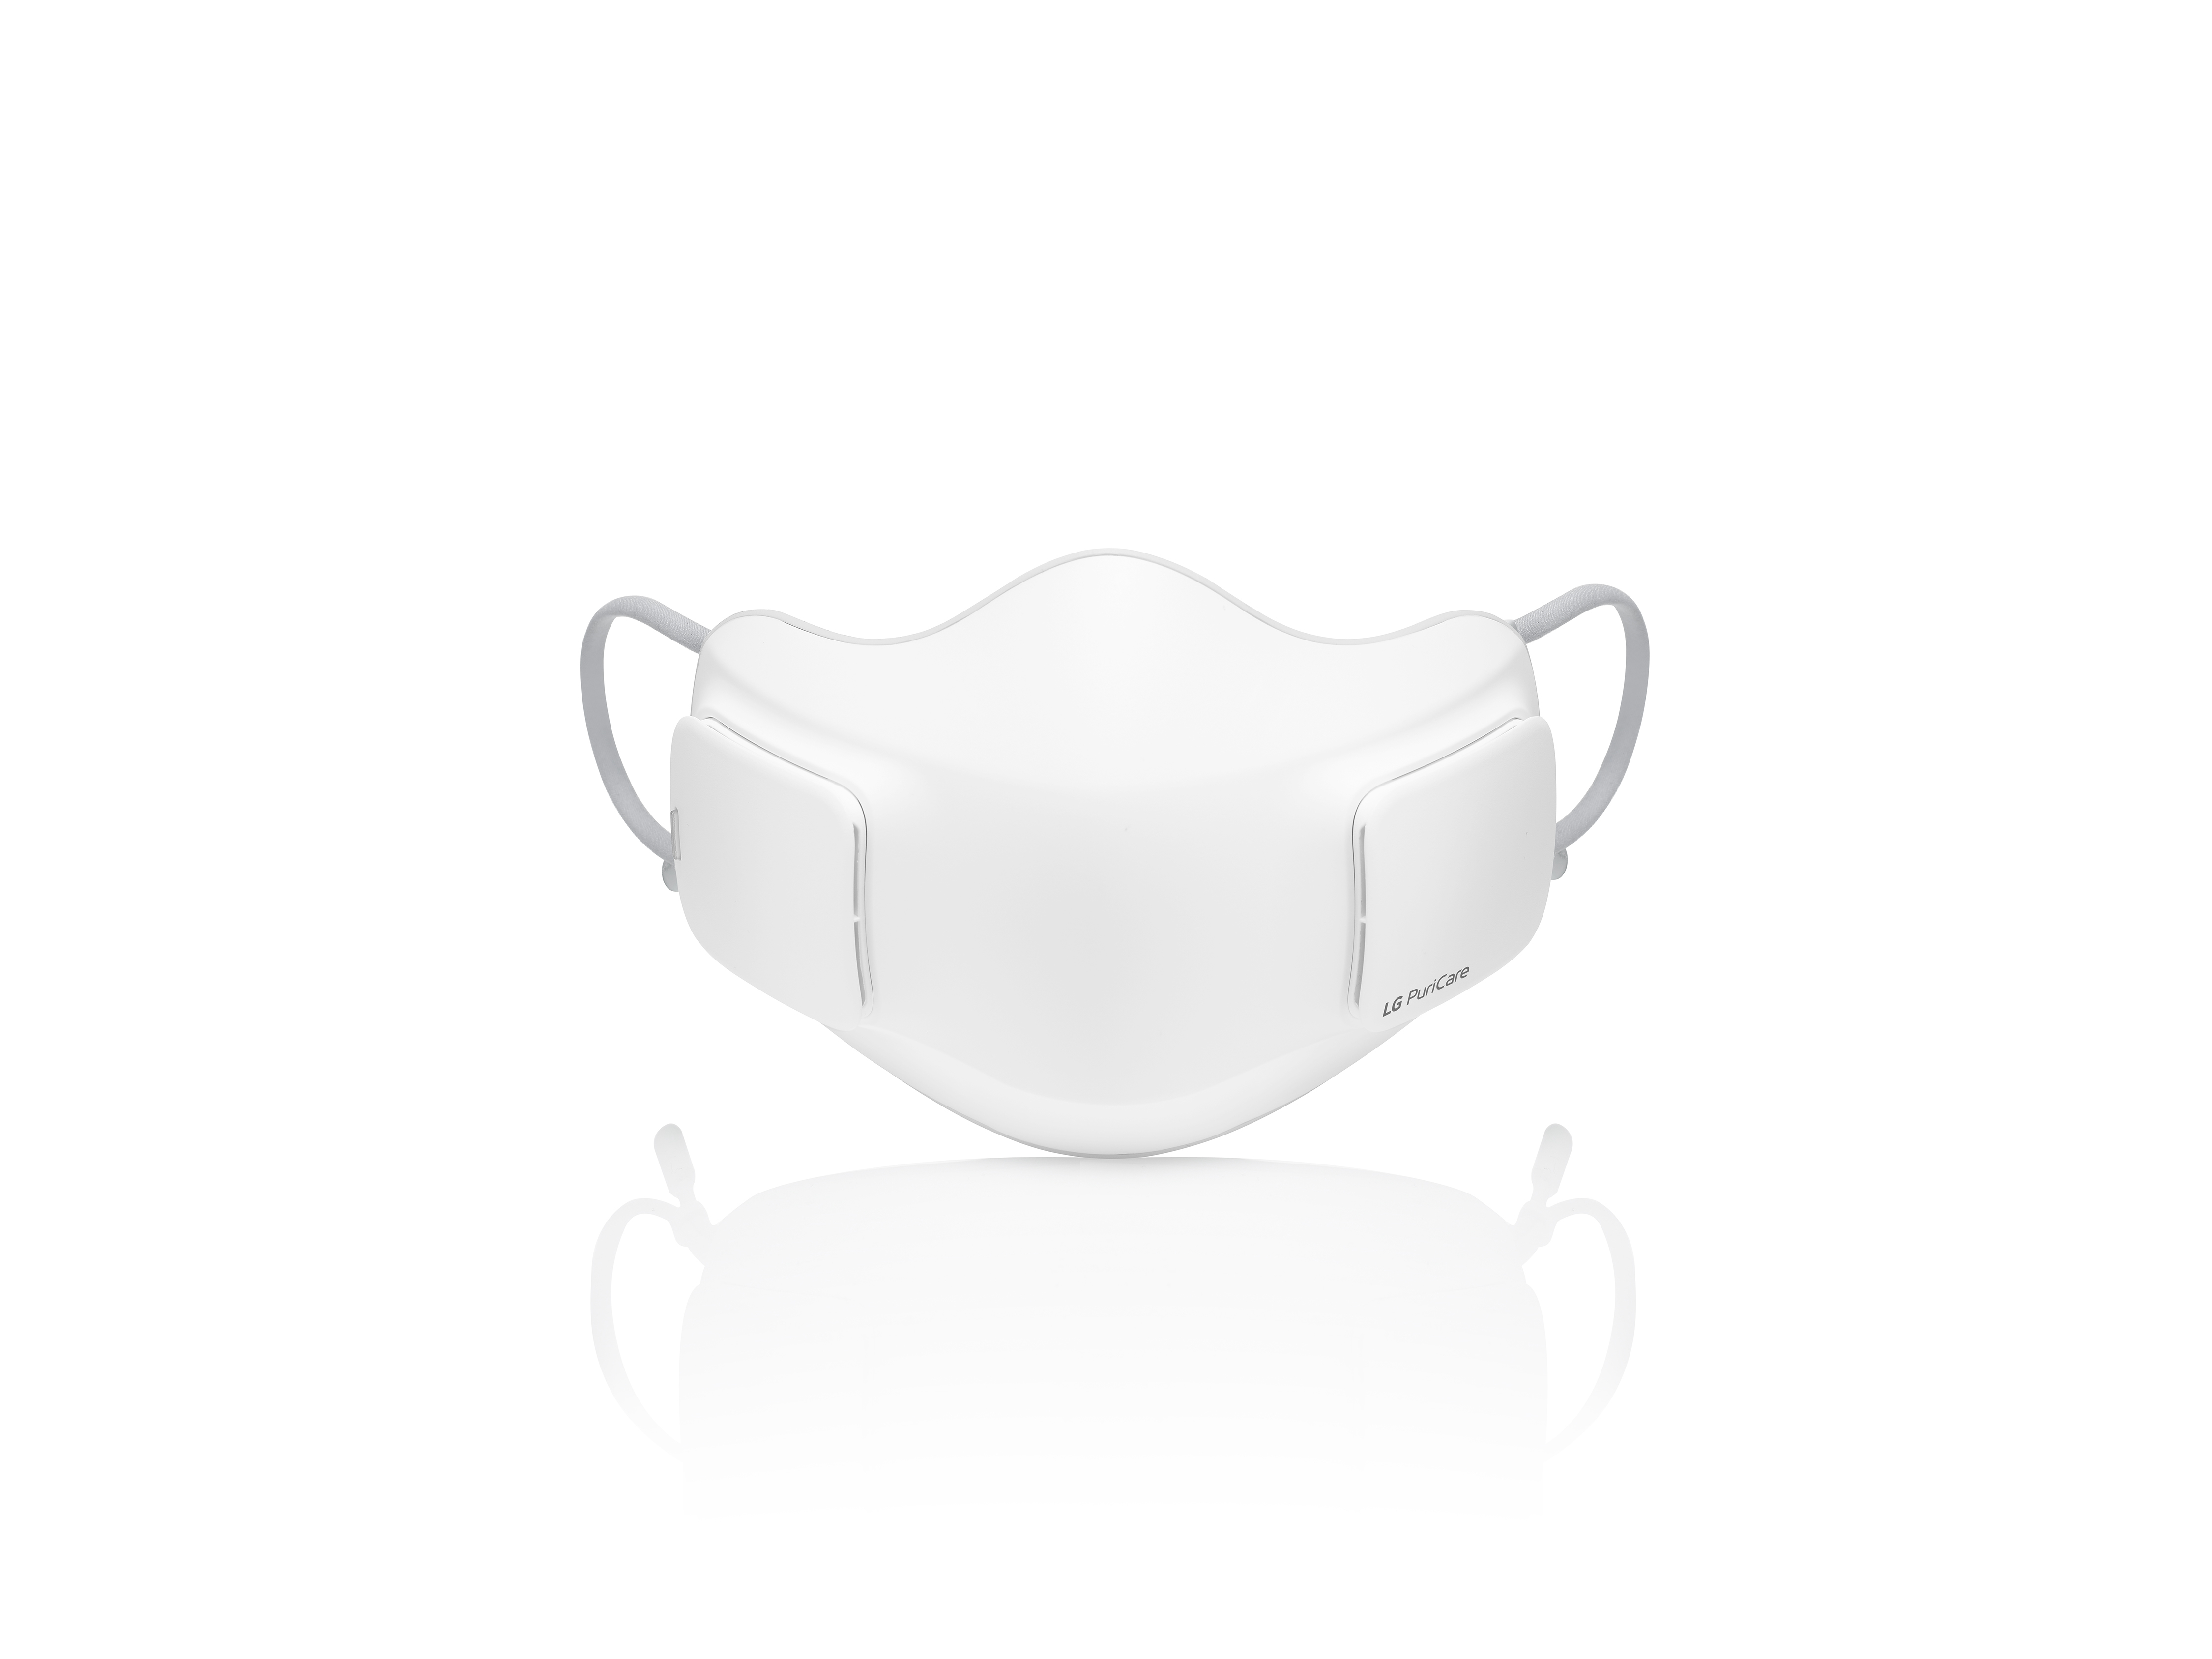 Wearable Air Purifier Mask